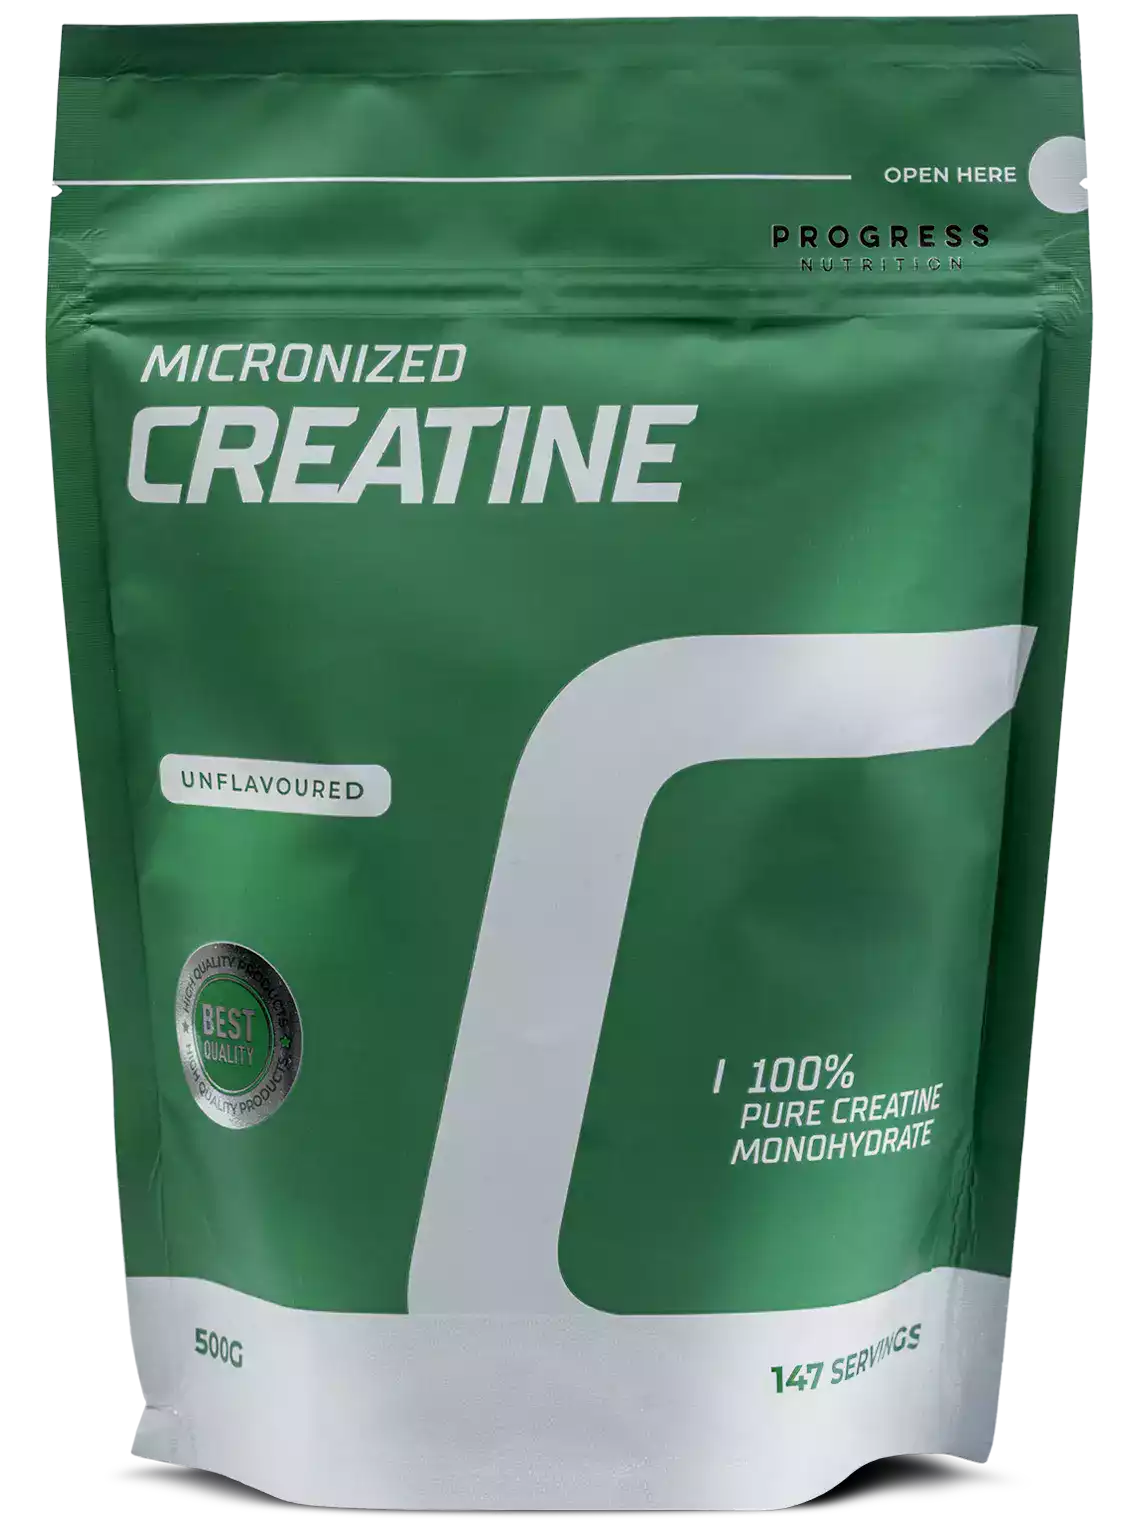 100% Creatine Monohydrate (500 гр)